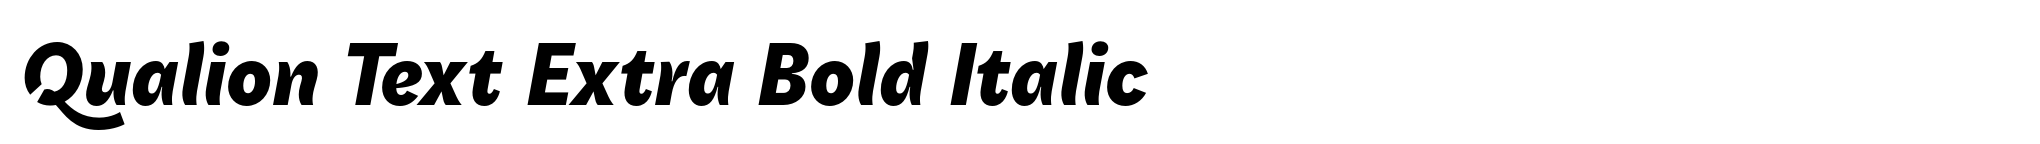 Qualion Text Extra Bold Italic image